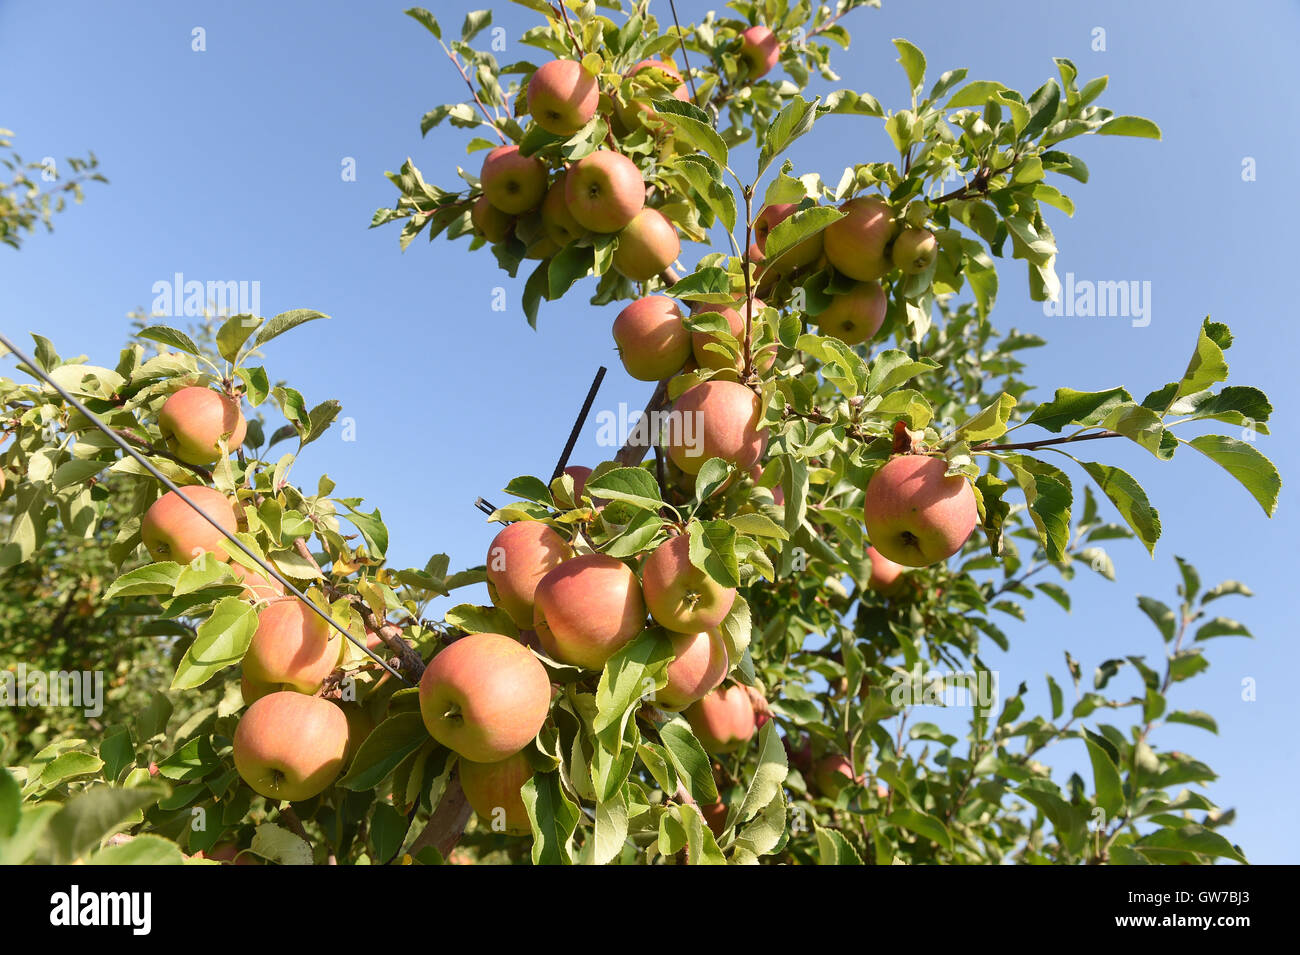 Vilemov, Czech Republic. 12th Sep, 2016. Harvest of apples of the cultivar Sampion in the apple collective farm Senice in Vilemov, Czech Republic, September 12, 2016. © Ludek Perina/CTK Photo/Alamy Live News Stock Photo